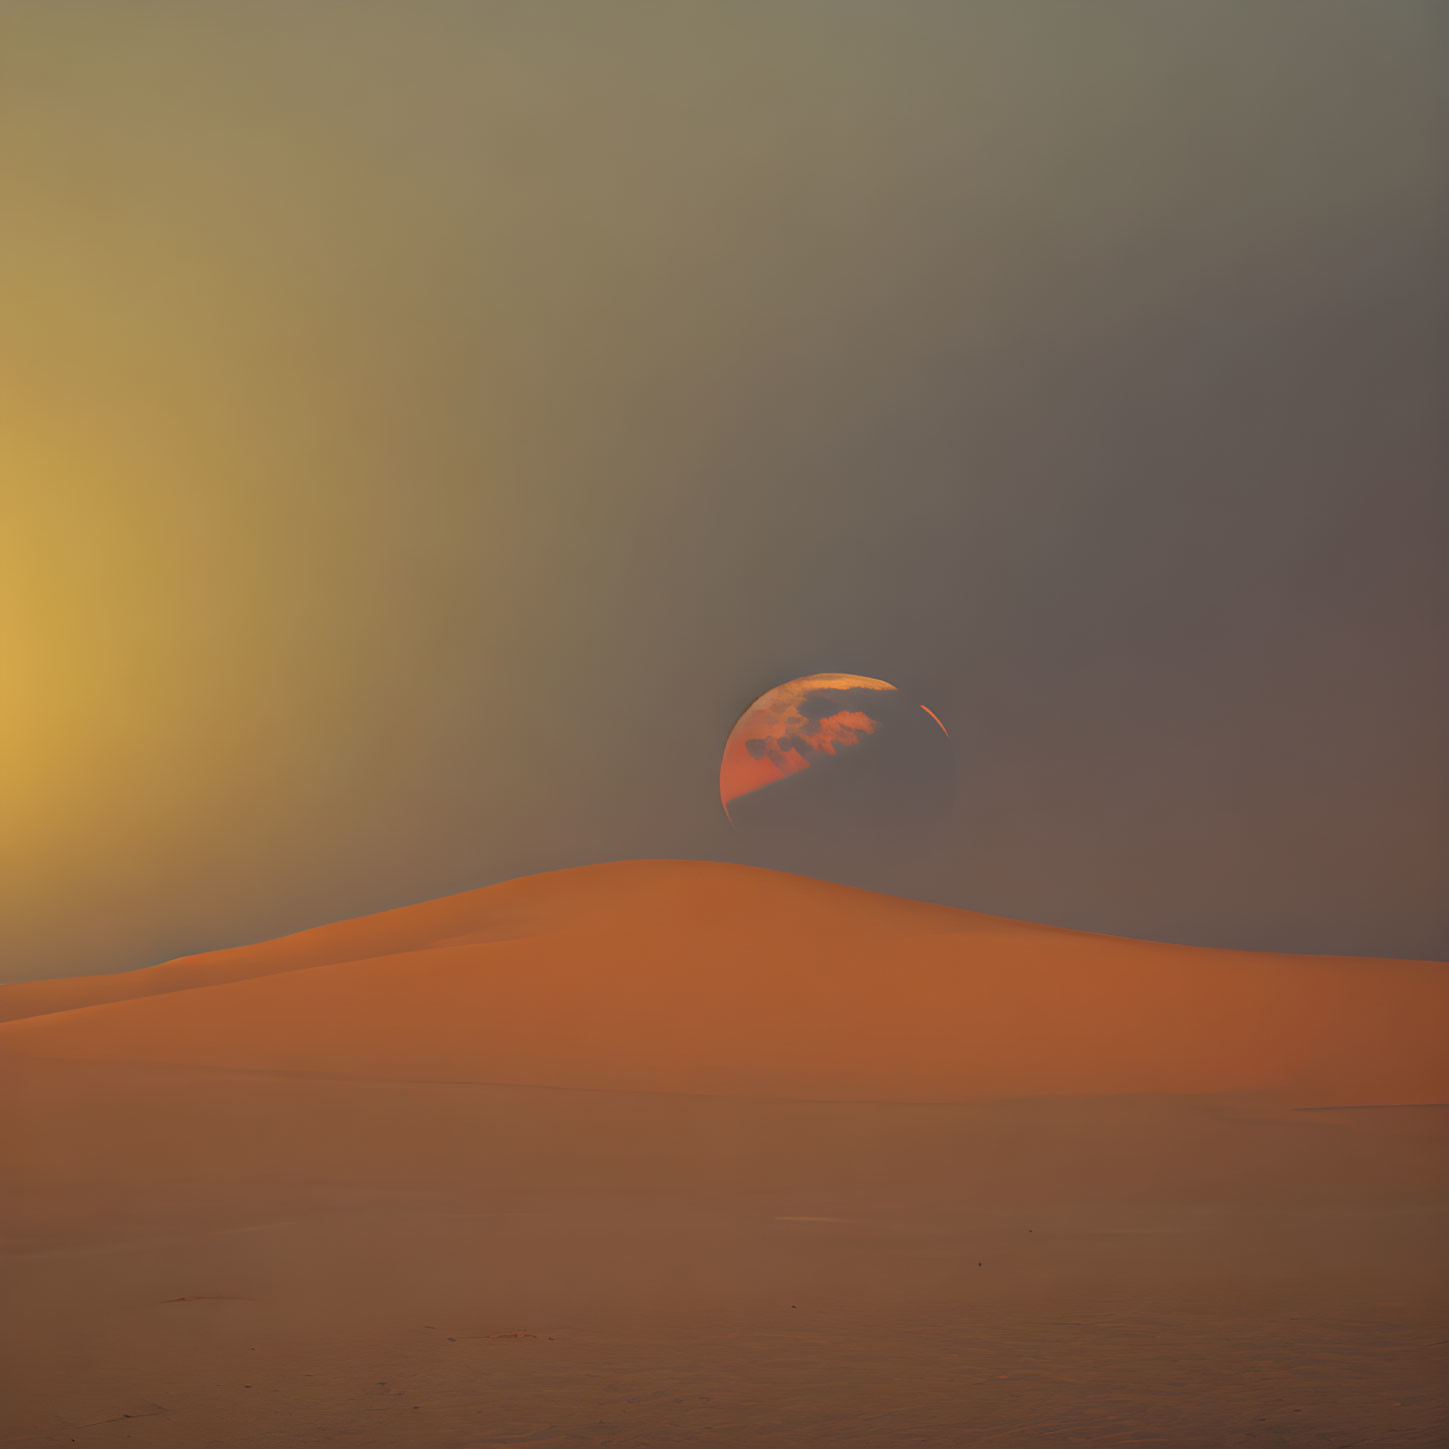 Tranquil desert sunset with orange-hued dune and setting sun